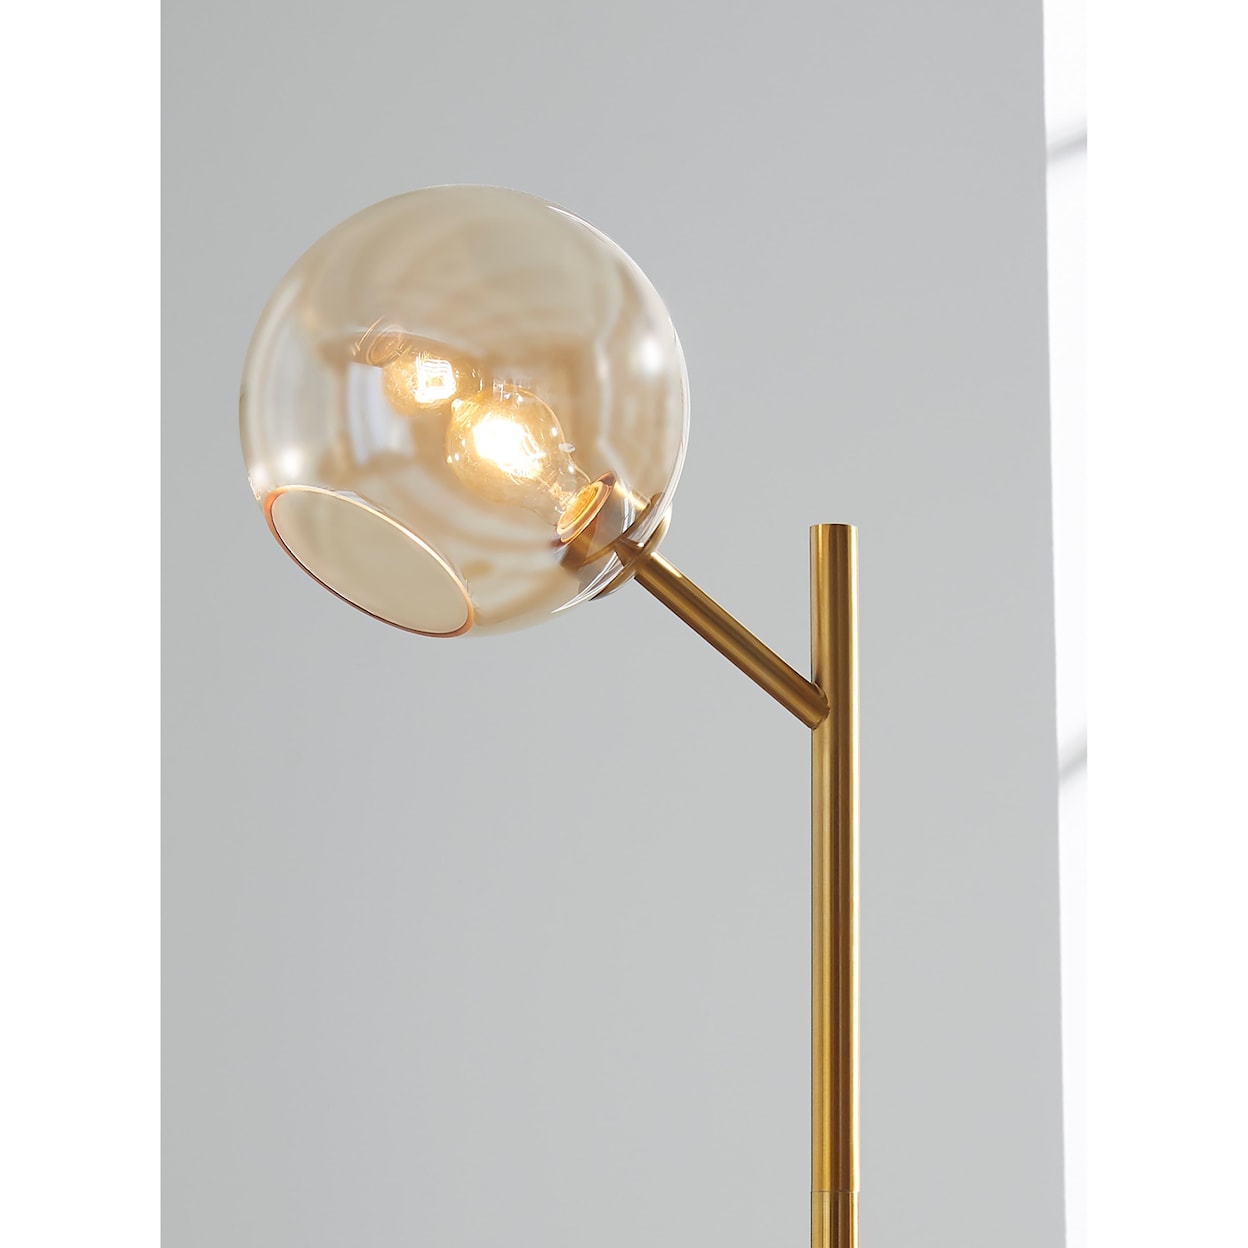 Ashley Furniture Signature Design Lamps - Contemporary Abanson Gold Finish Metal Floor Lamp